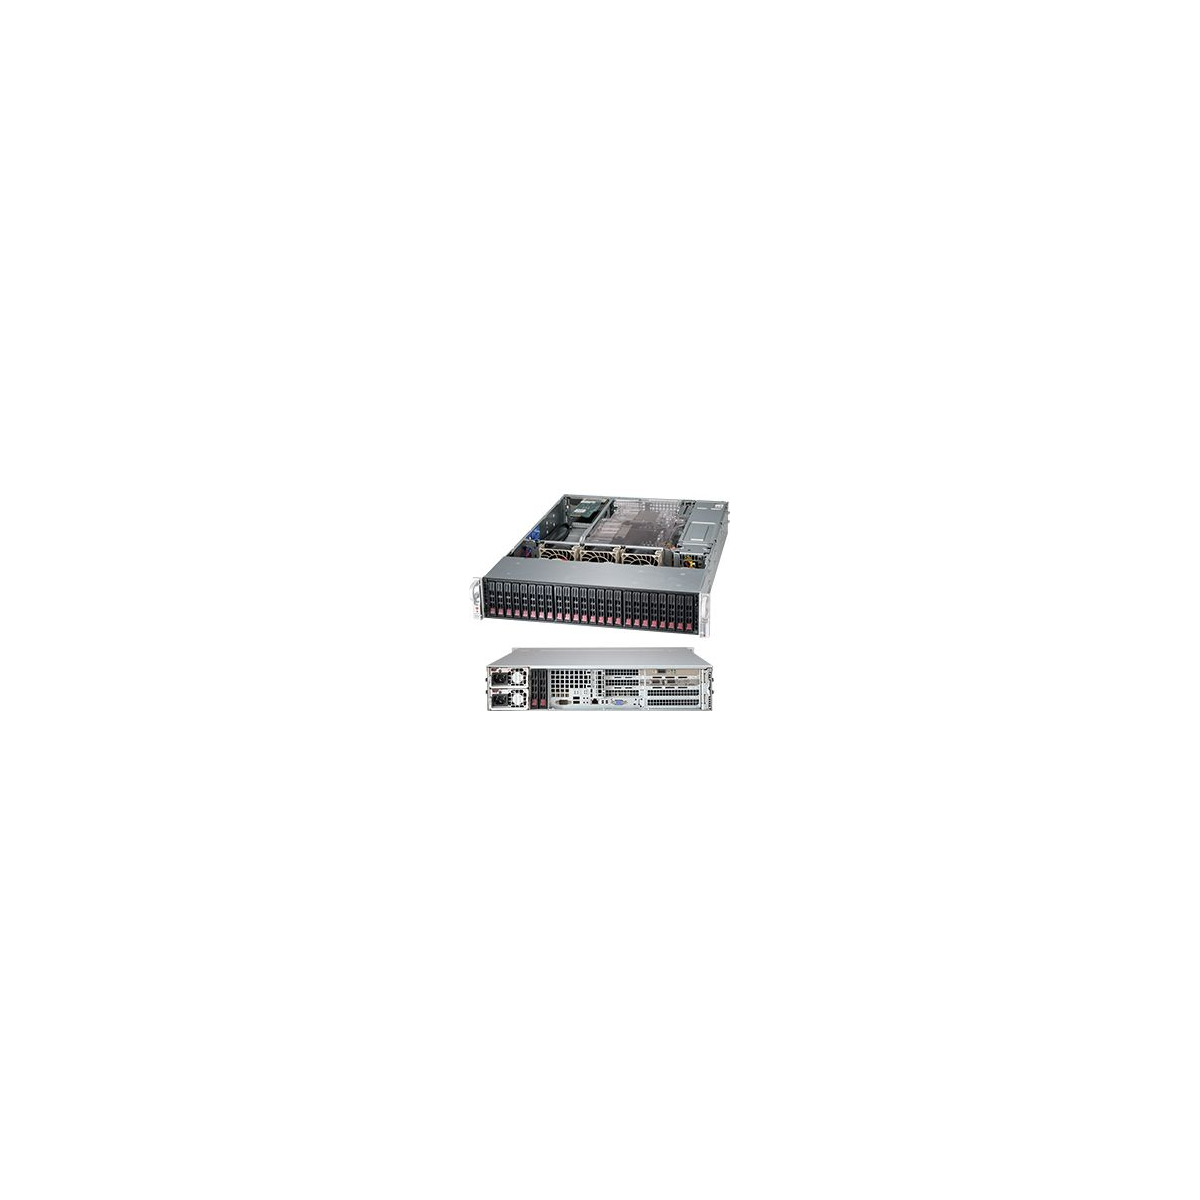 Supermicro SC216BA-R920WB - Rack - Server - Black - ATX,EATX - 2U - HDD,Power